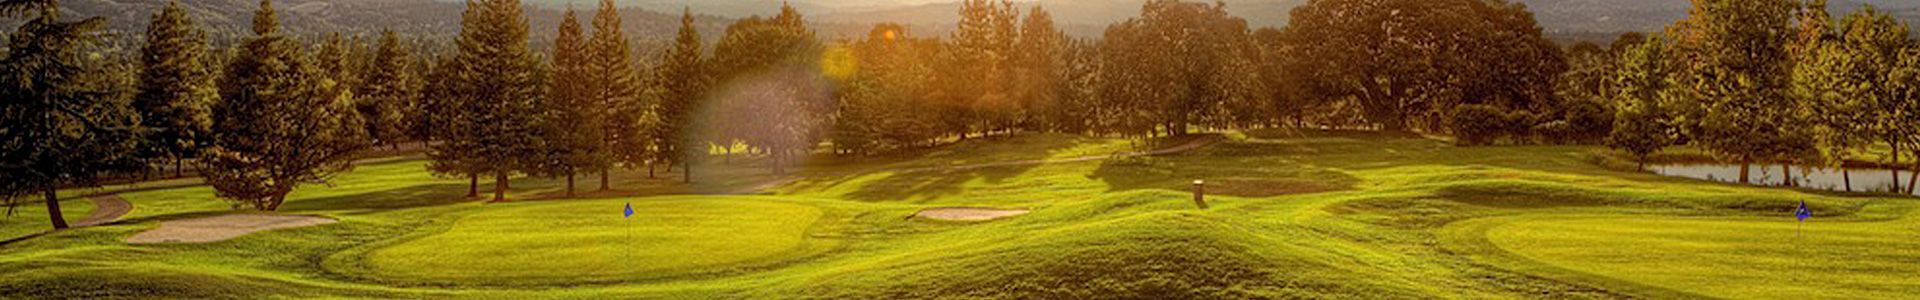 boundary oaks golf course